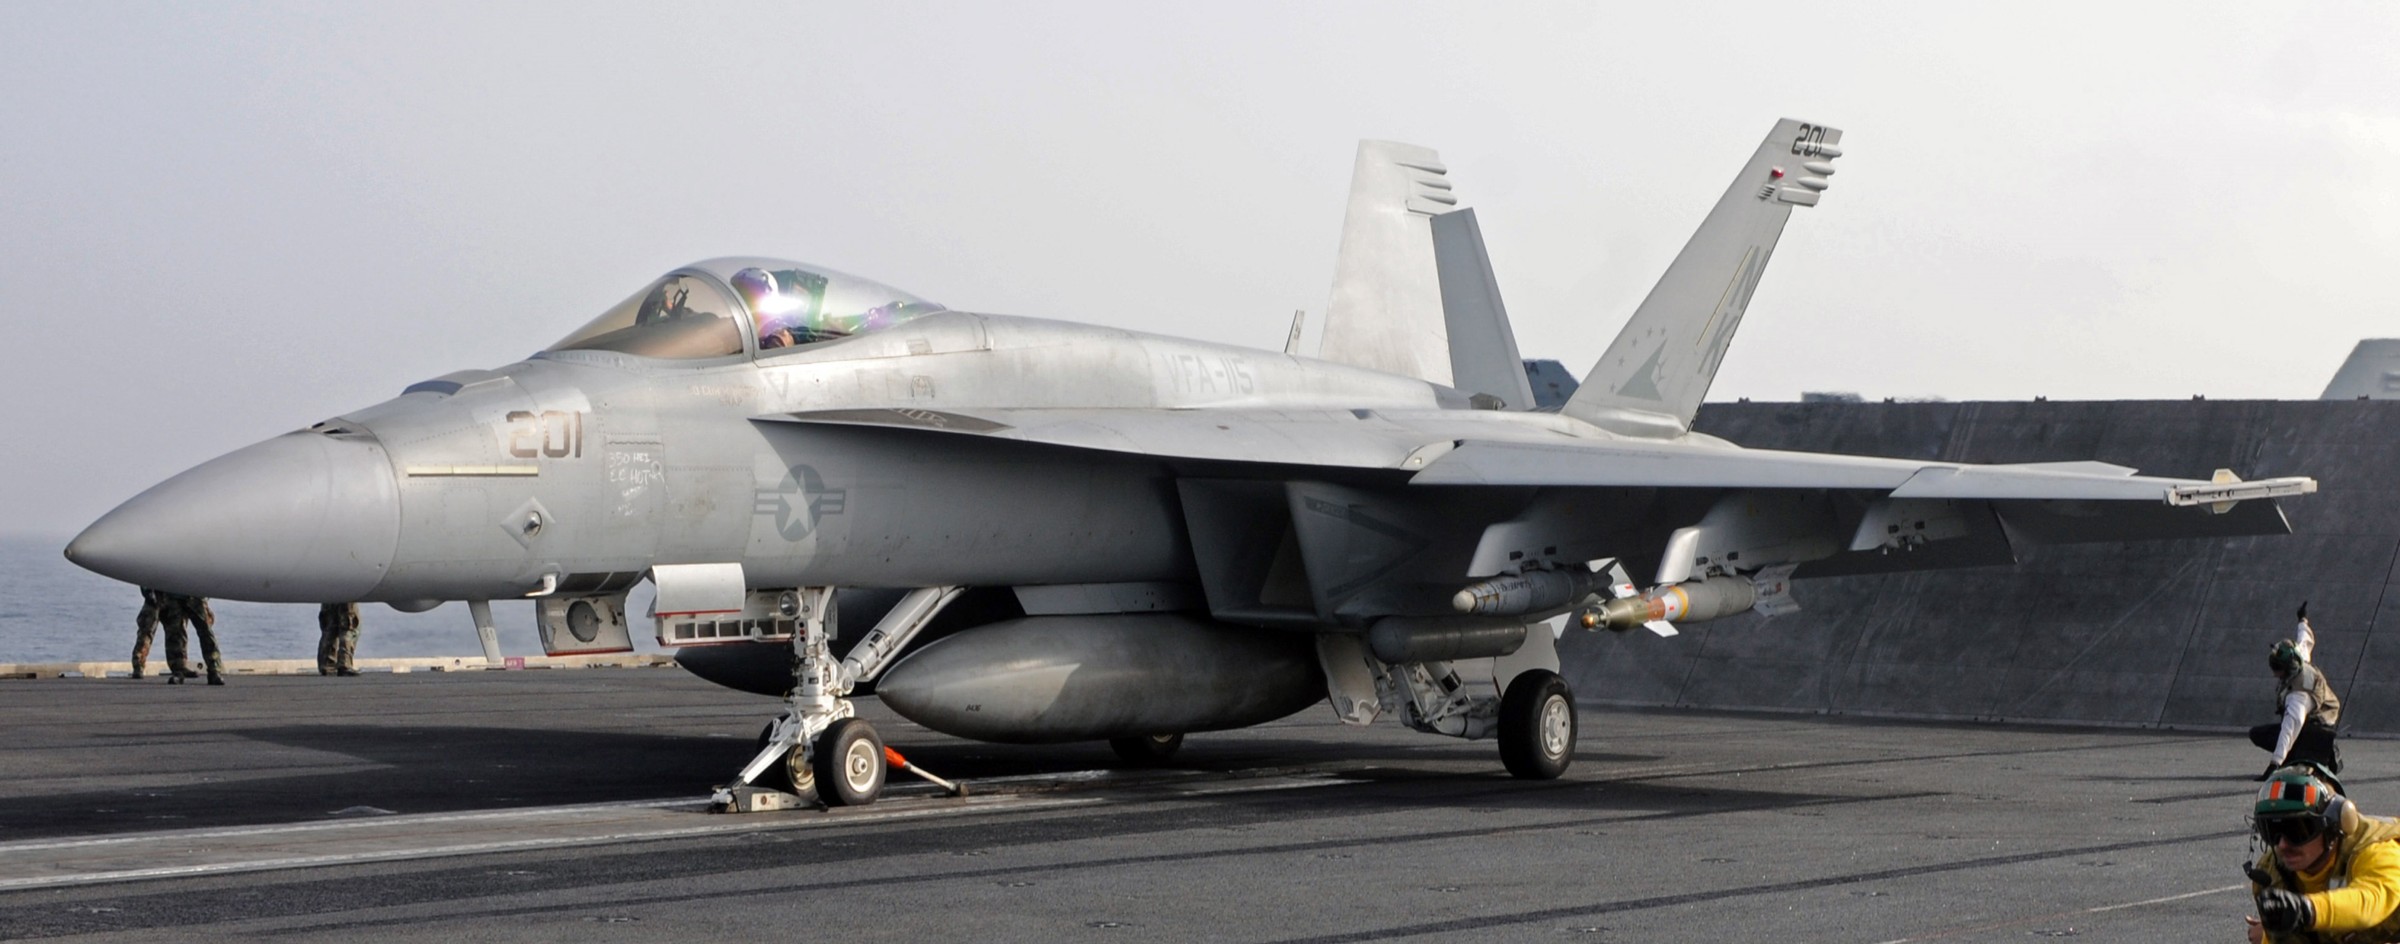 vfa-115 eagles strike fighter squadron f/a-18e super hornet carrier air wing cvw-14 uss ronald reagan cvn-76 2009 45